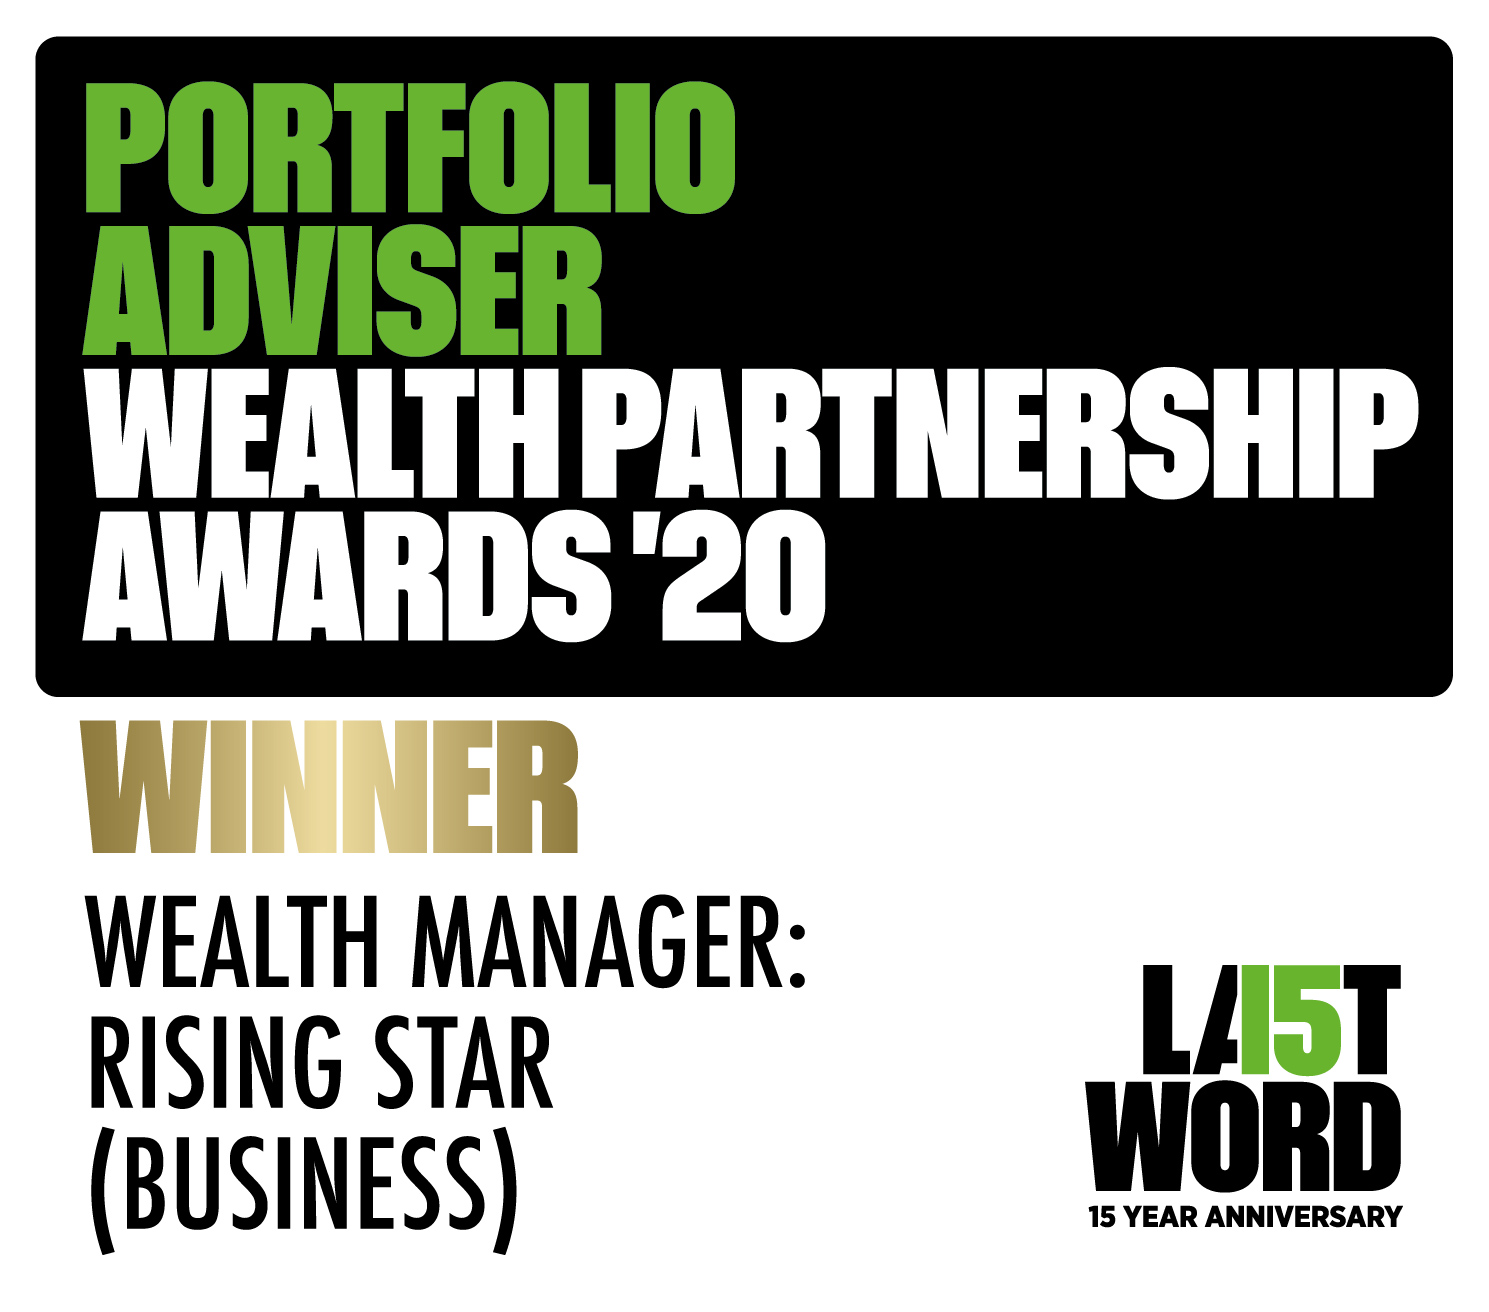 Portfolio Adviser Wealth Partnership Awards 2020)